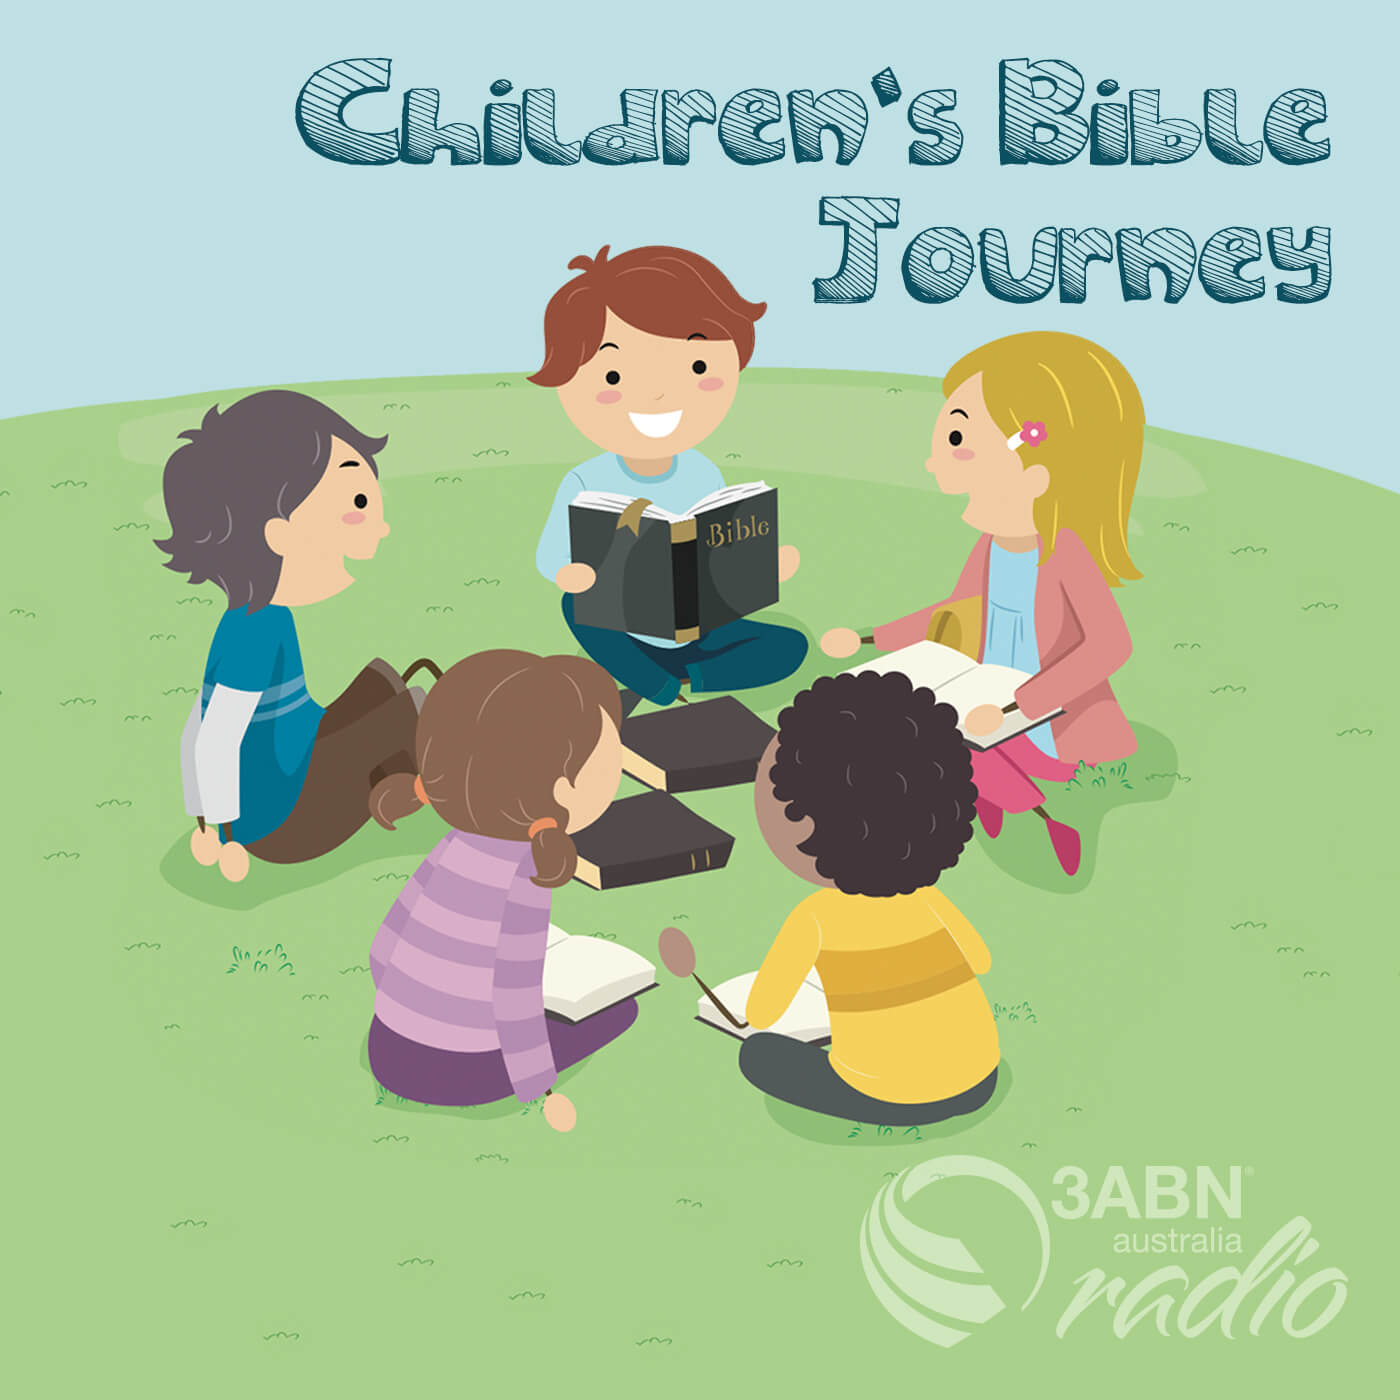 Children's Bible Journey - 2205